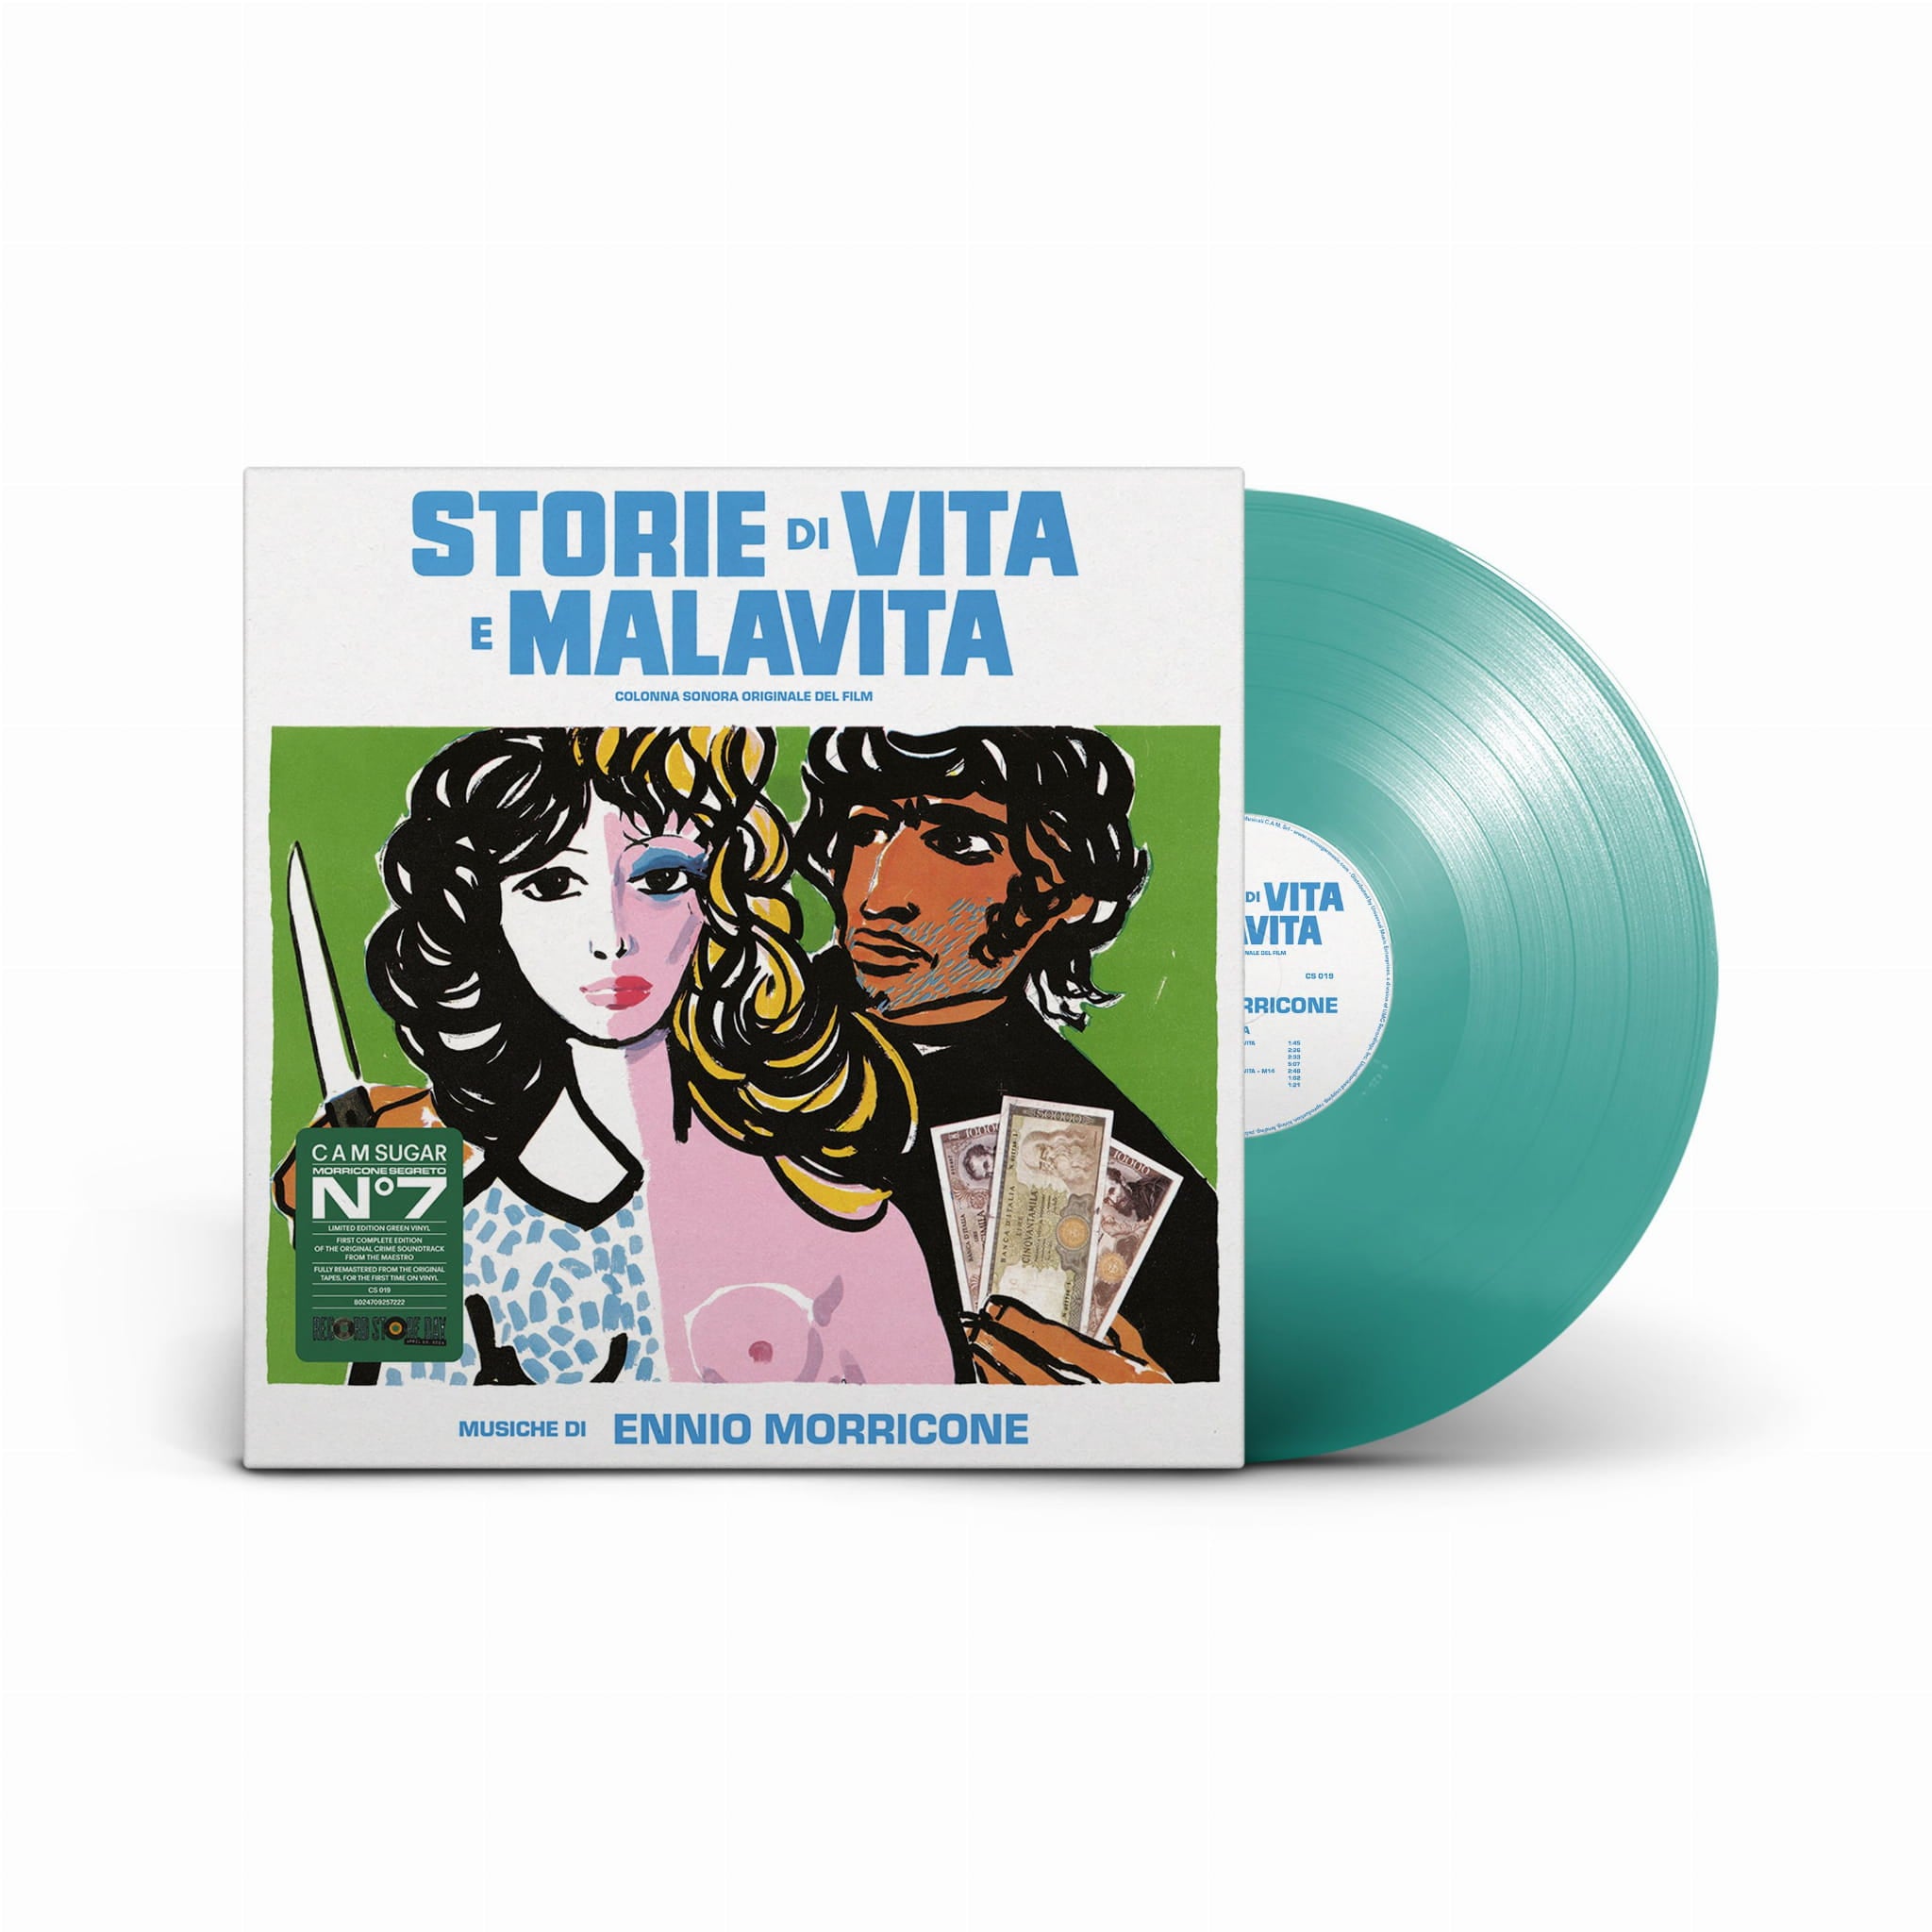 Ennio Morricone - Storie di vita e malavita: Limited Green Vinyl LP [RSD24]